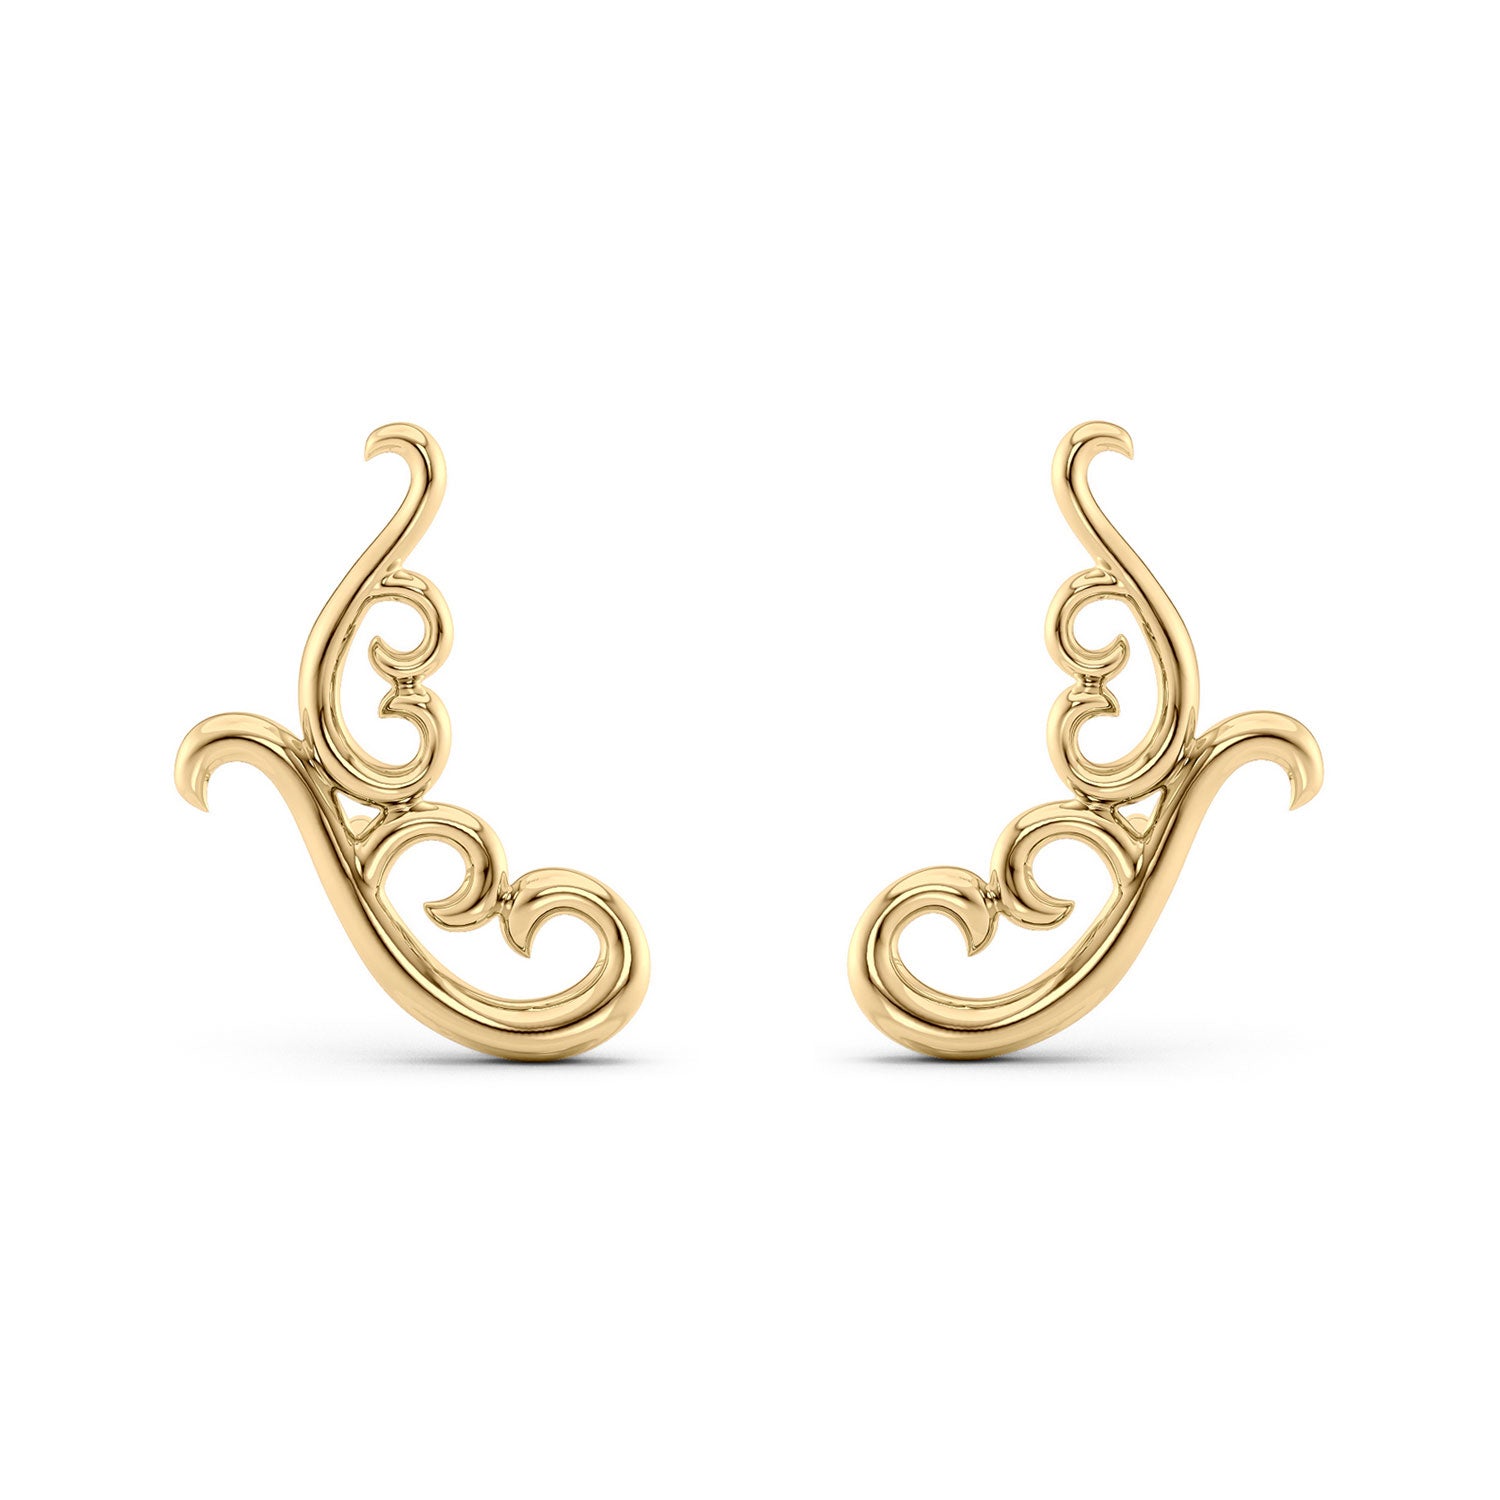 Lebrusan Studio Artisan Filigree ear climber stud earrings in 18ct recycled yellow gold, pair